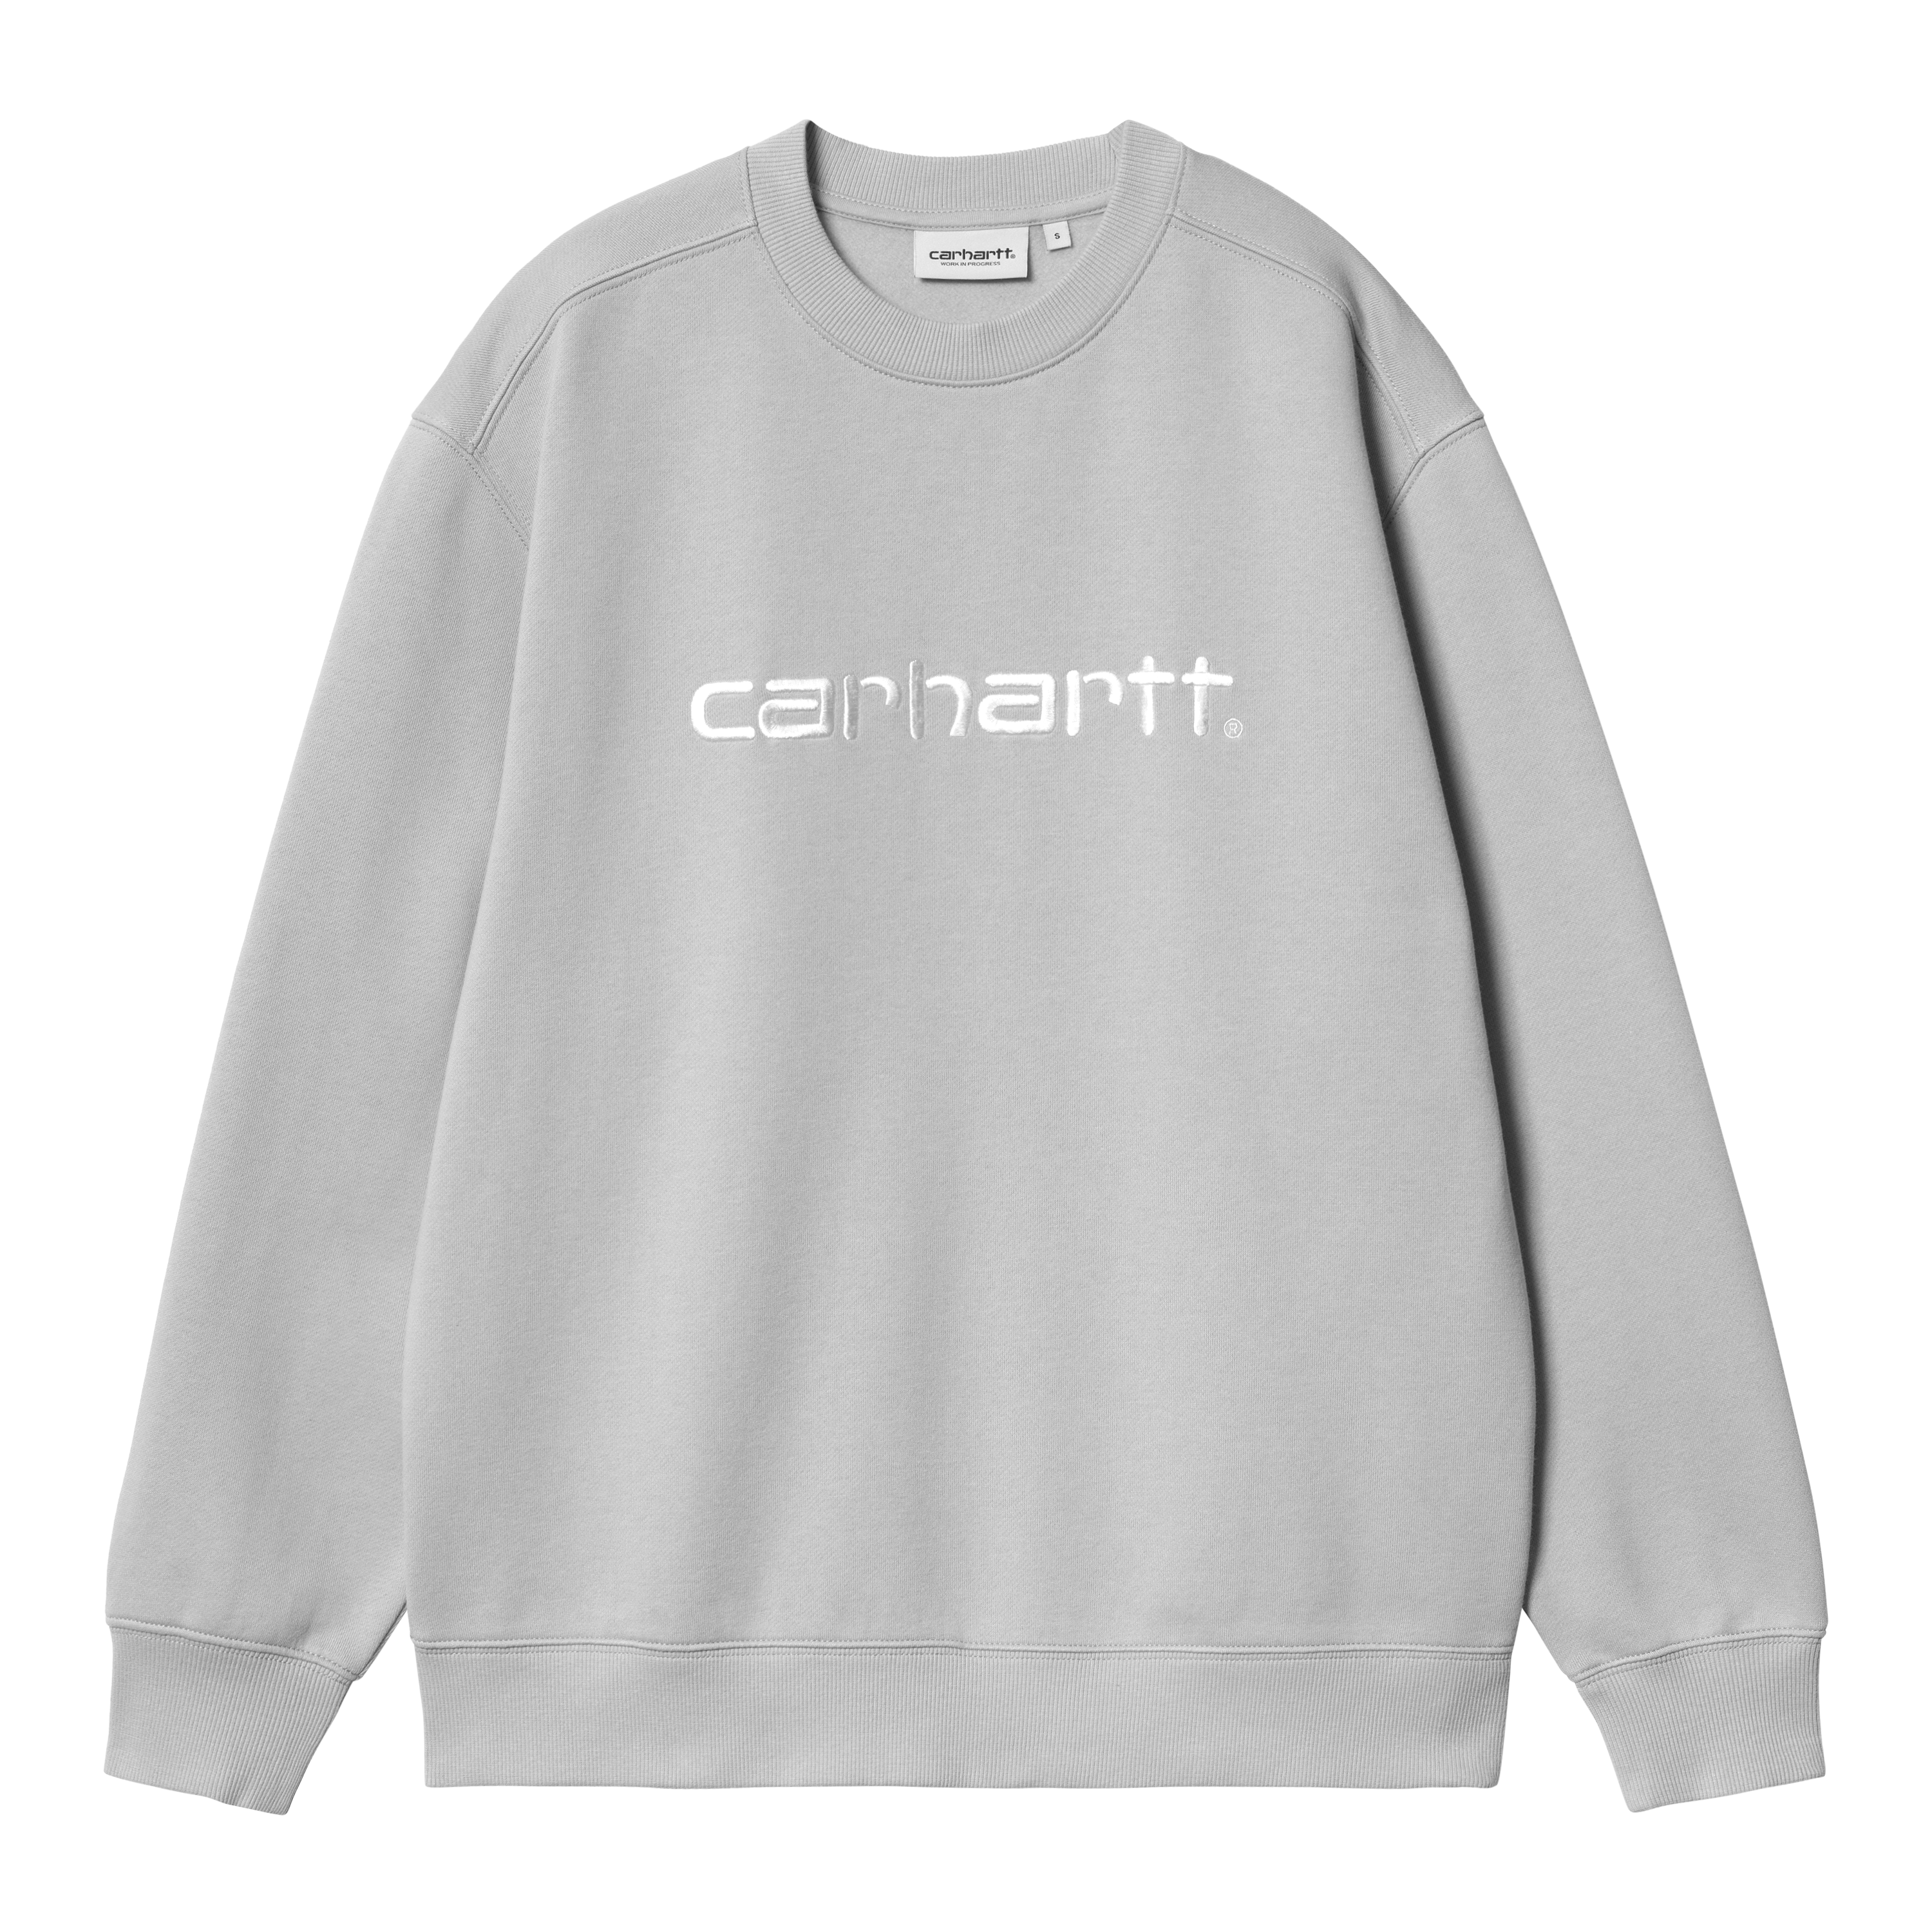 Carhartt WIP Women’s Carhartt Sweatshirt